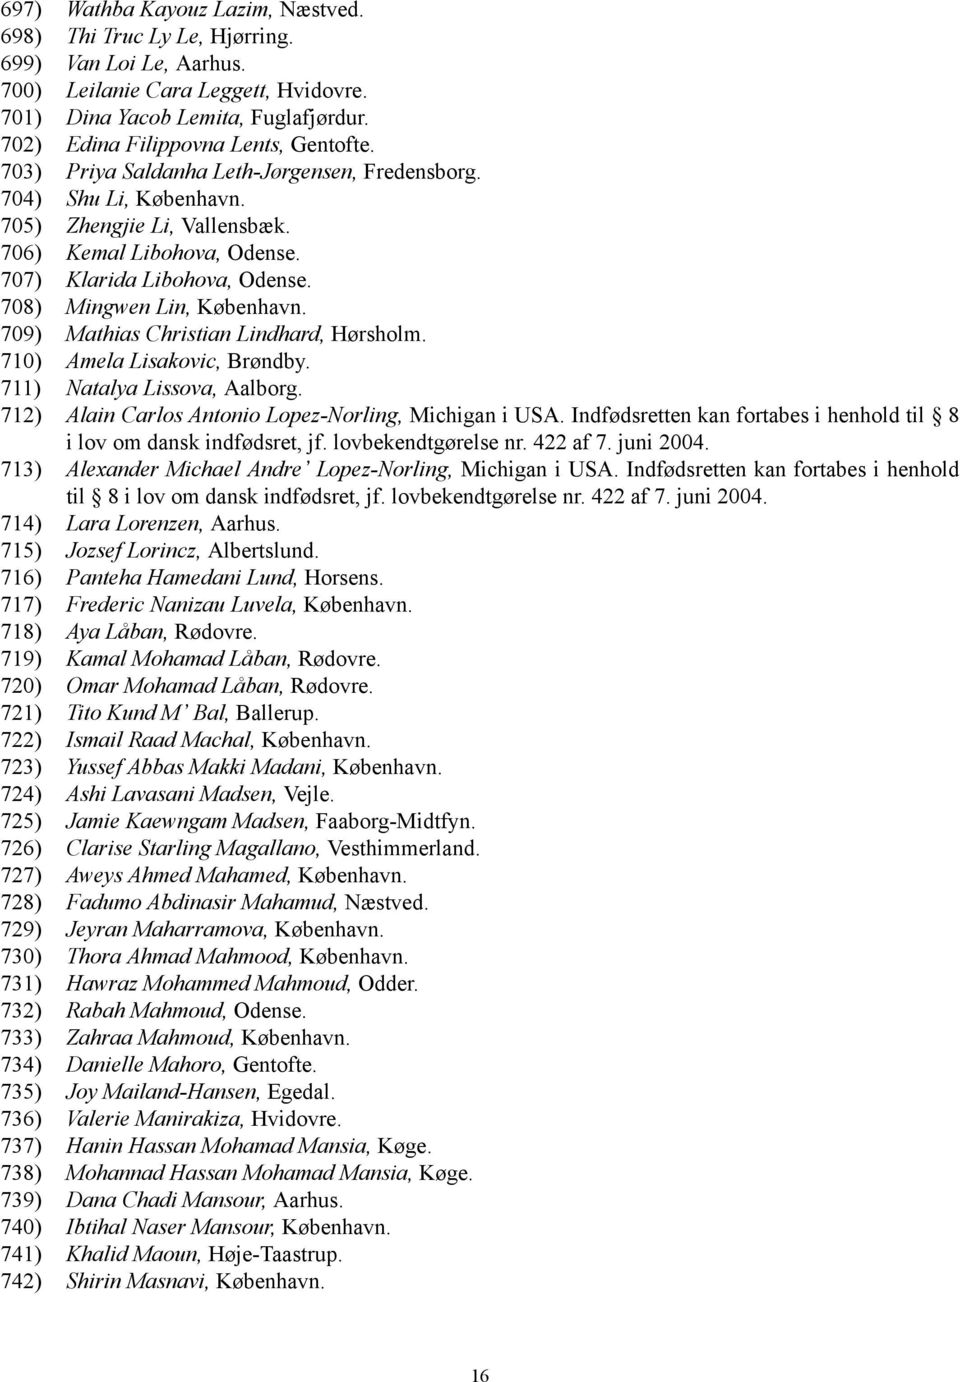 707) Klarida Libohova, Odense. 708) Mingwen Lin, København. 709) Mathias Christian Lindhard, Hørsholm. 710) Amela Lisakovic, Brøndby. 711) Natalya Lissova, Aalborg.